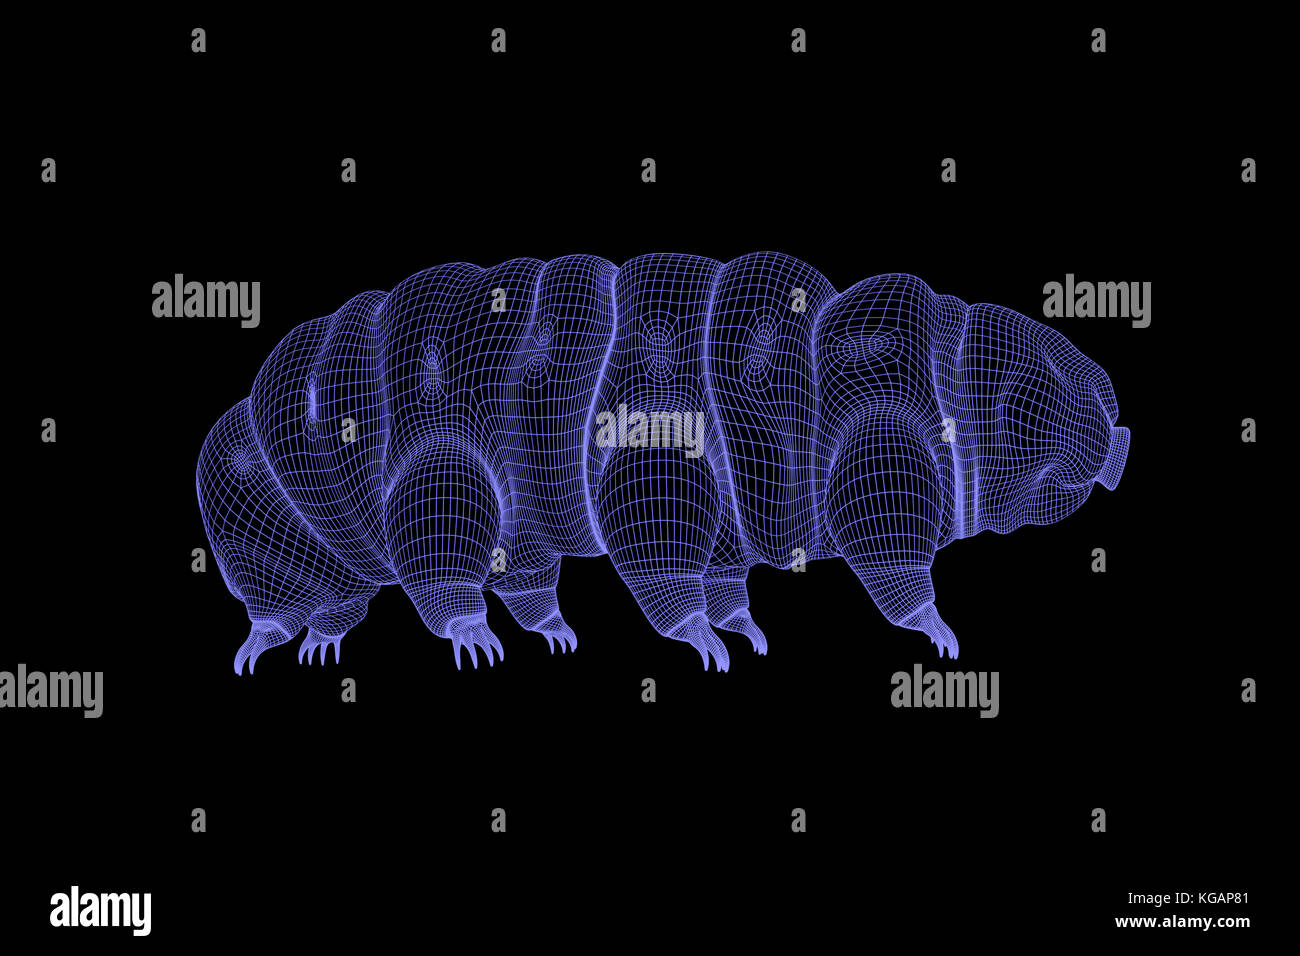 tardigrade, water bear 3d wireframe rendering on black background Stock Photo